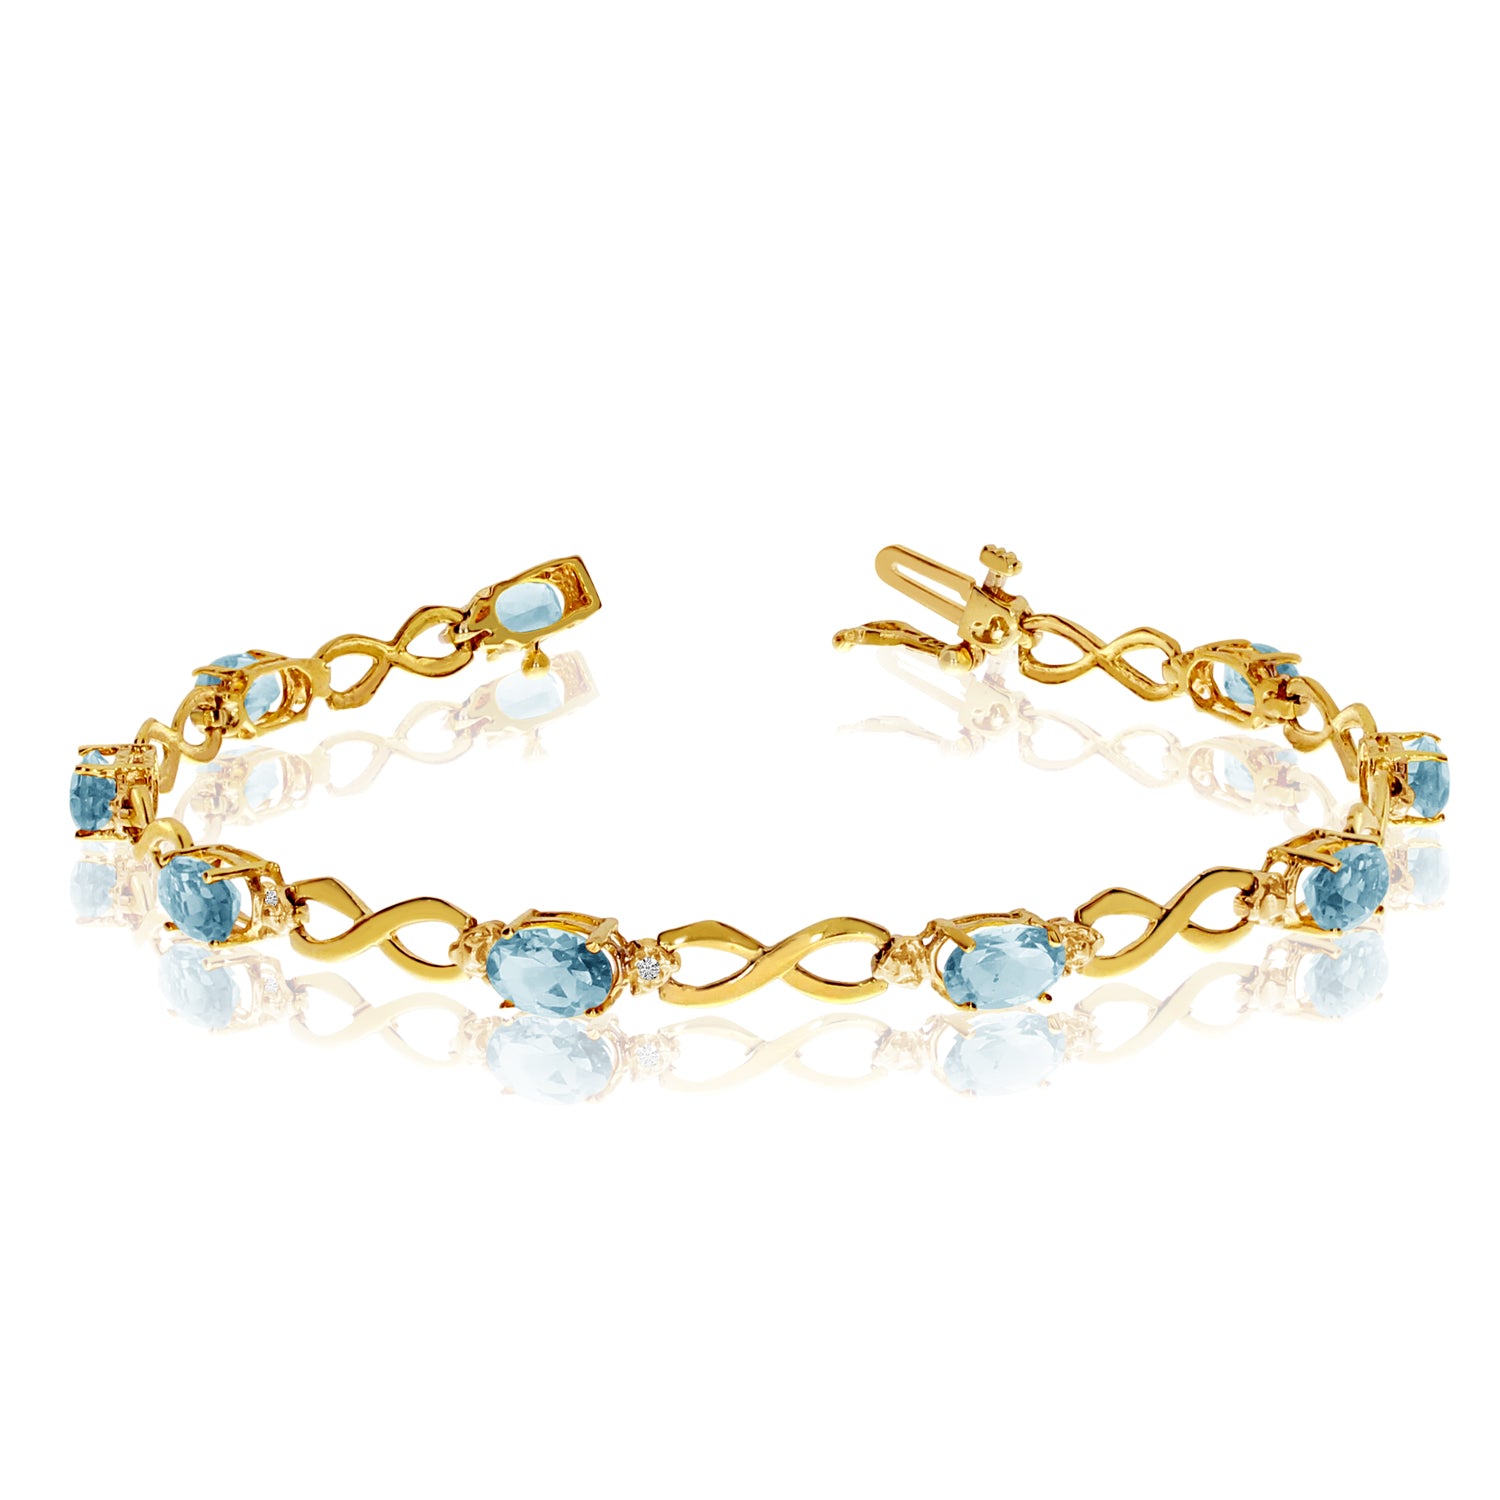 10K Yellow Gold Oval Aquamarine Stones And Diamonds Infinity Tennis Bracelet, 7" fine designer jewelry for men and women